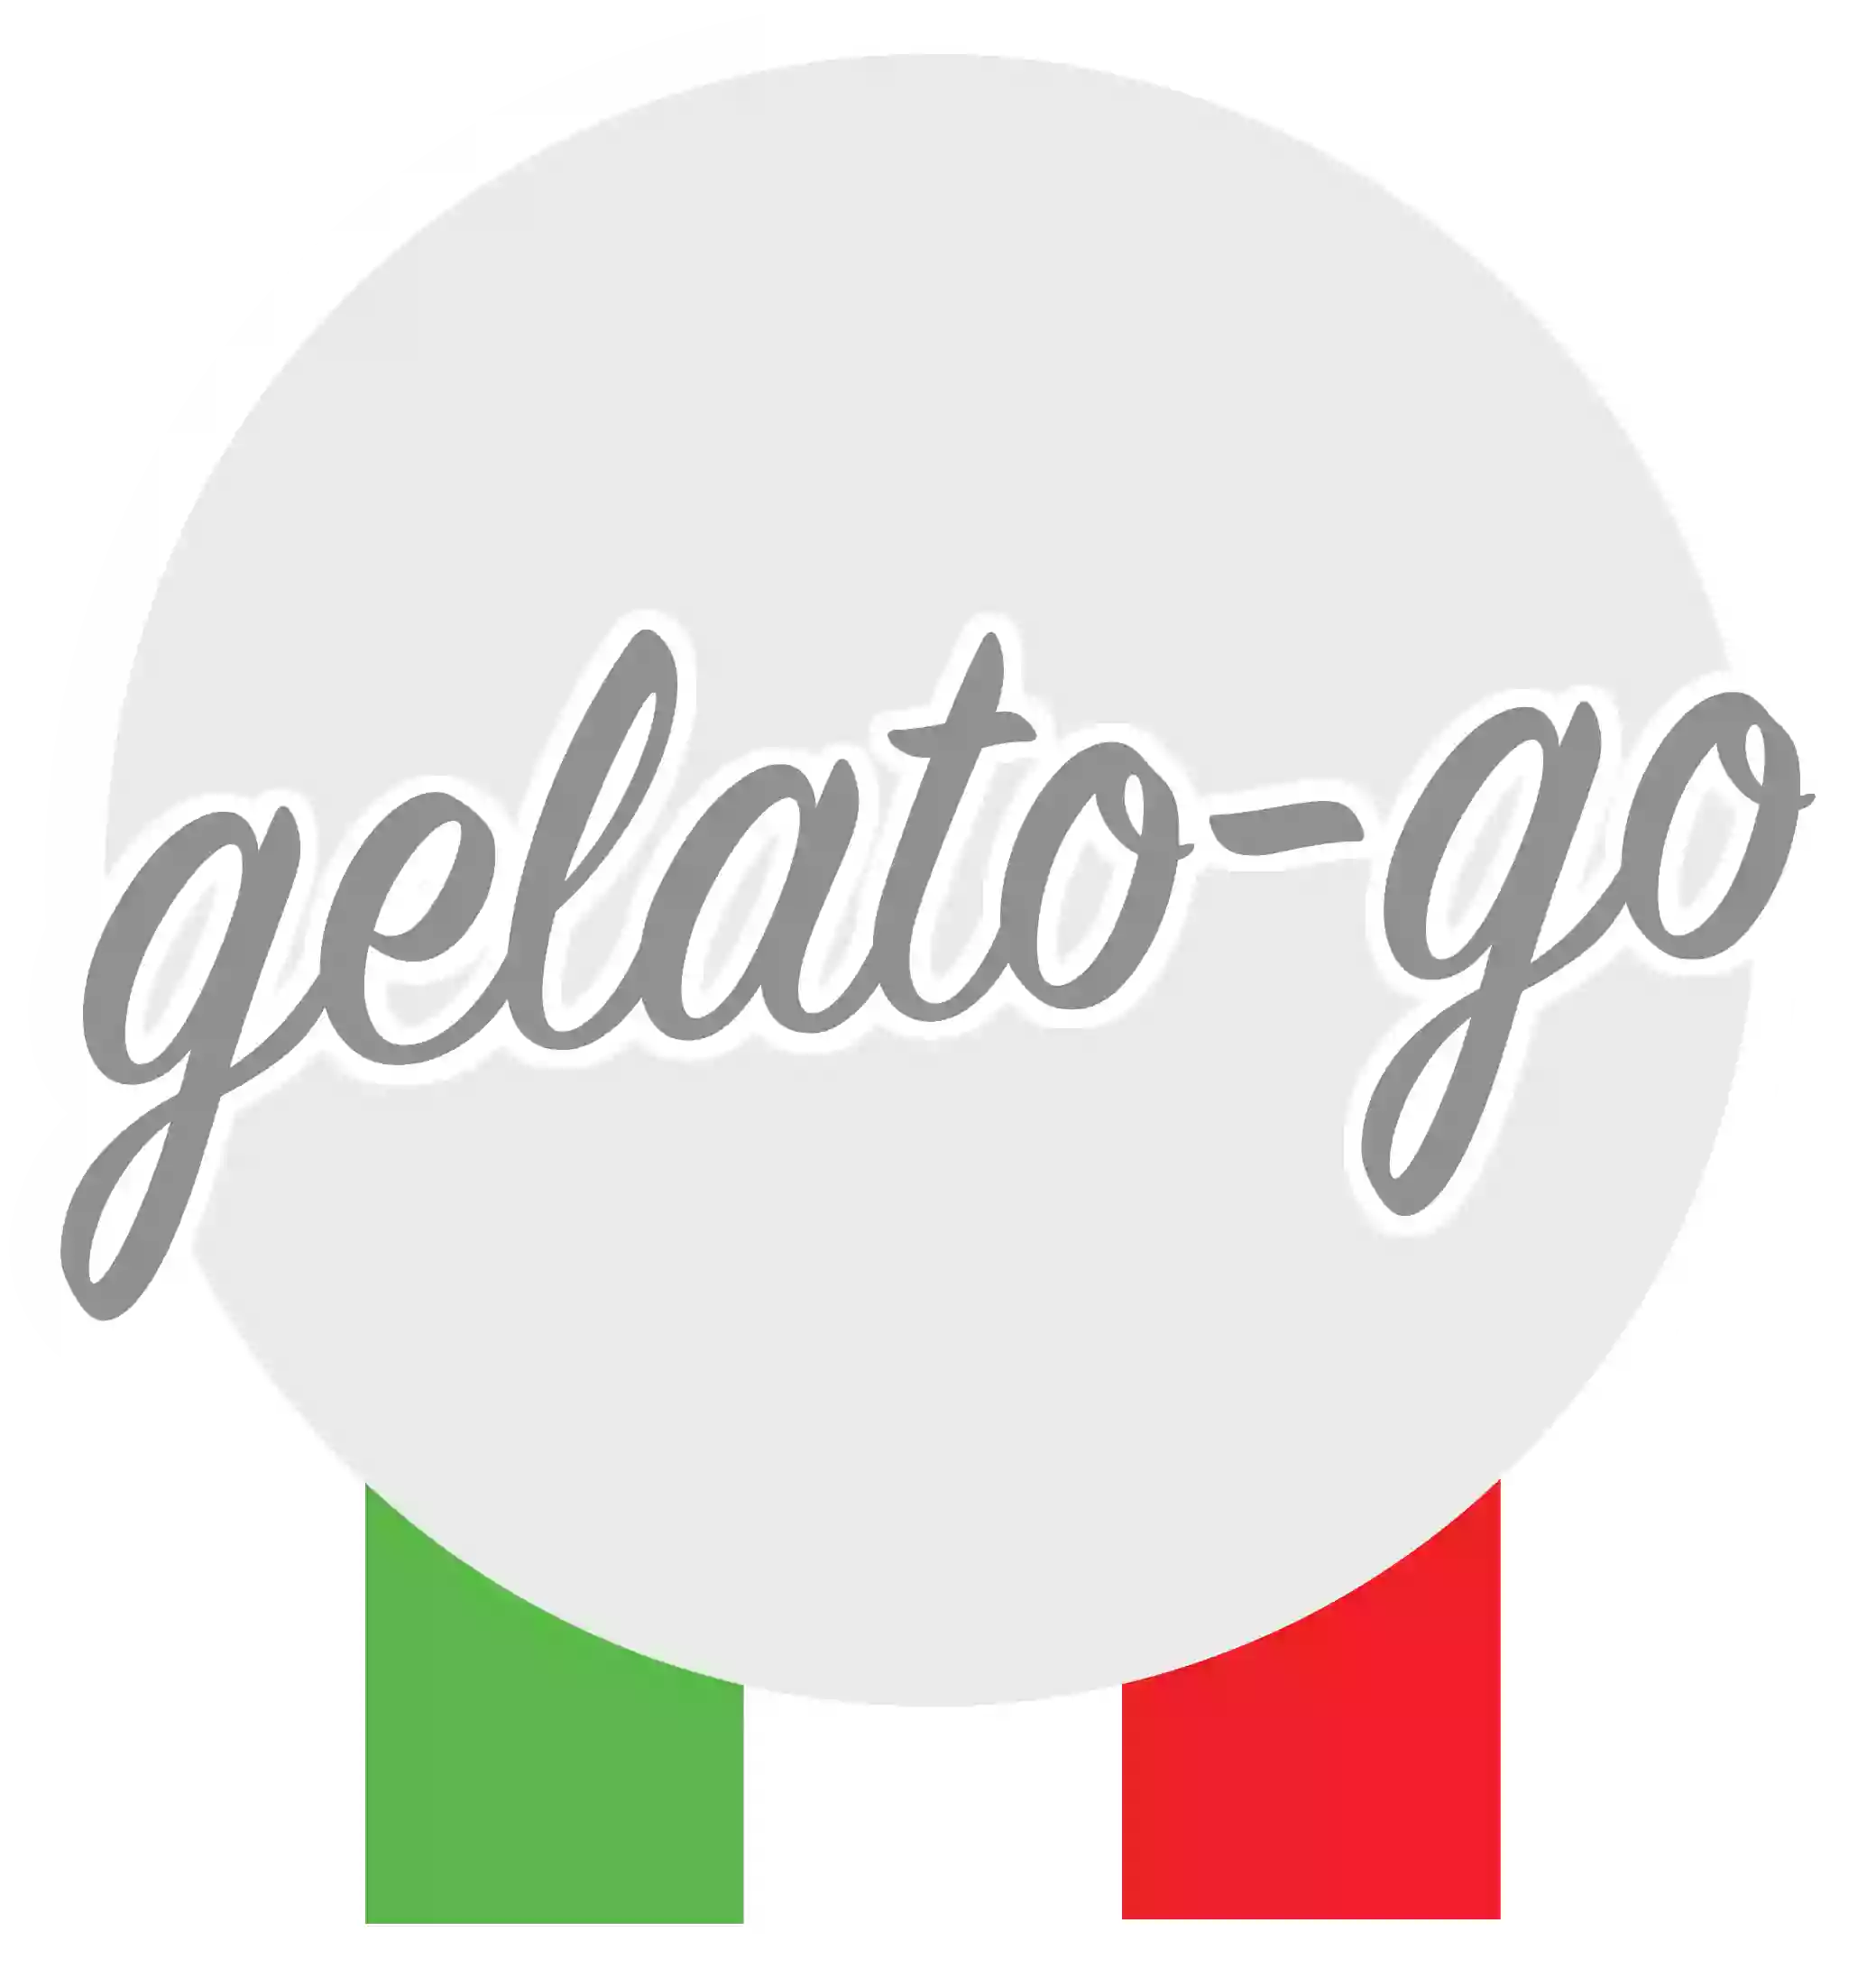 Gelato-go Miami Shores